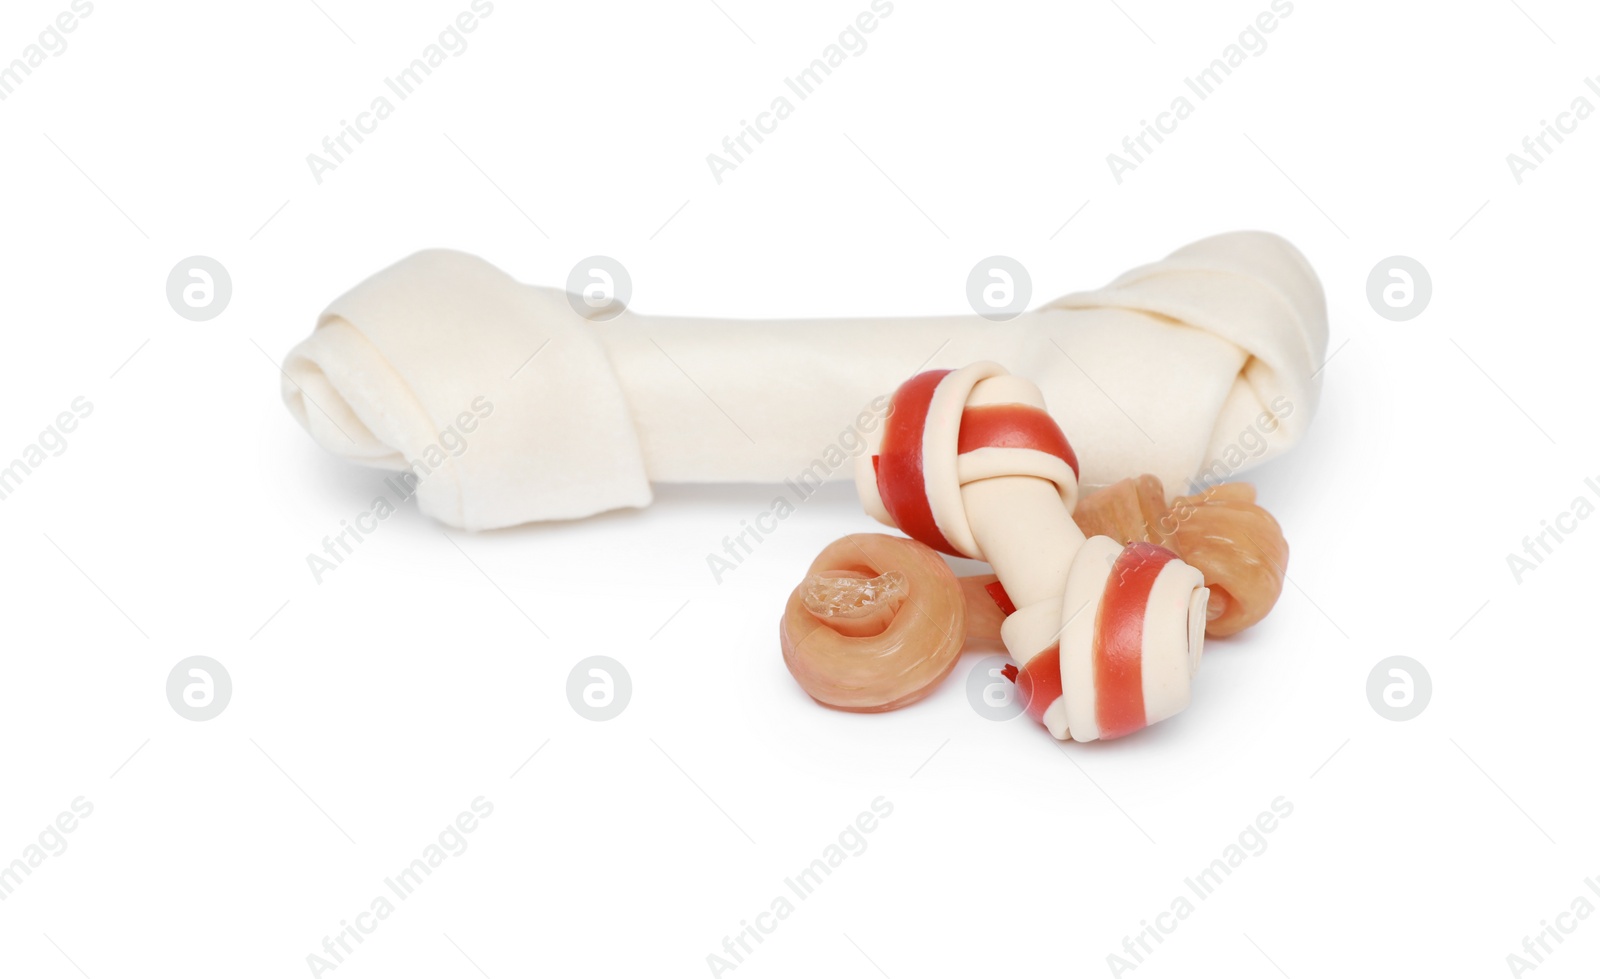 Photo of Different bone dog treats isolated on white